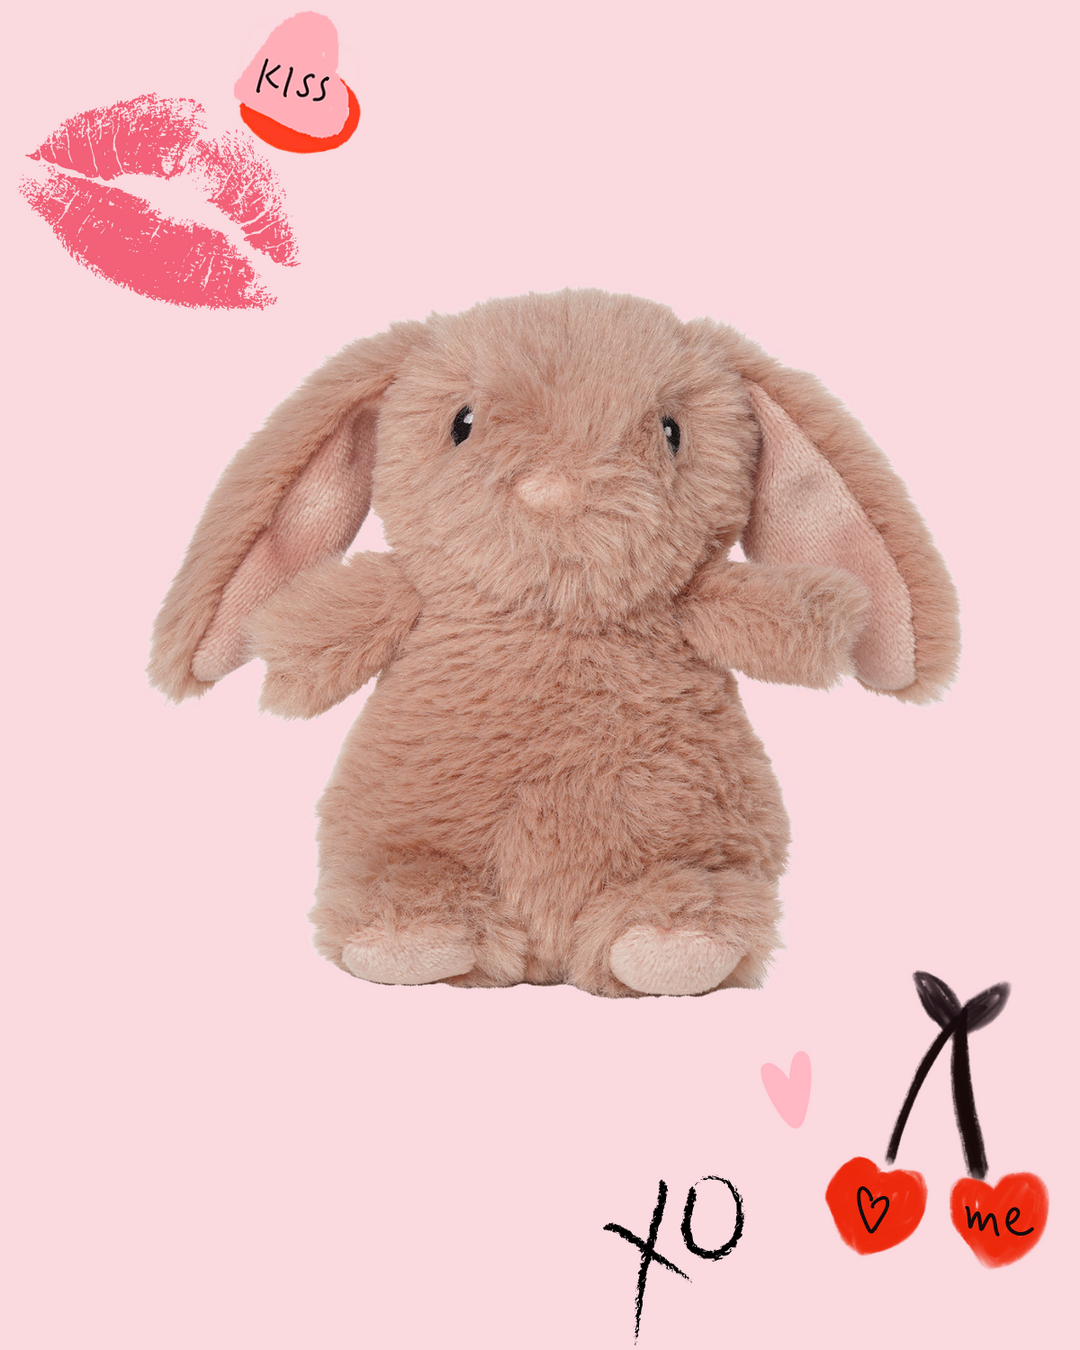 pink bunny plush toy